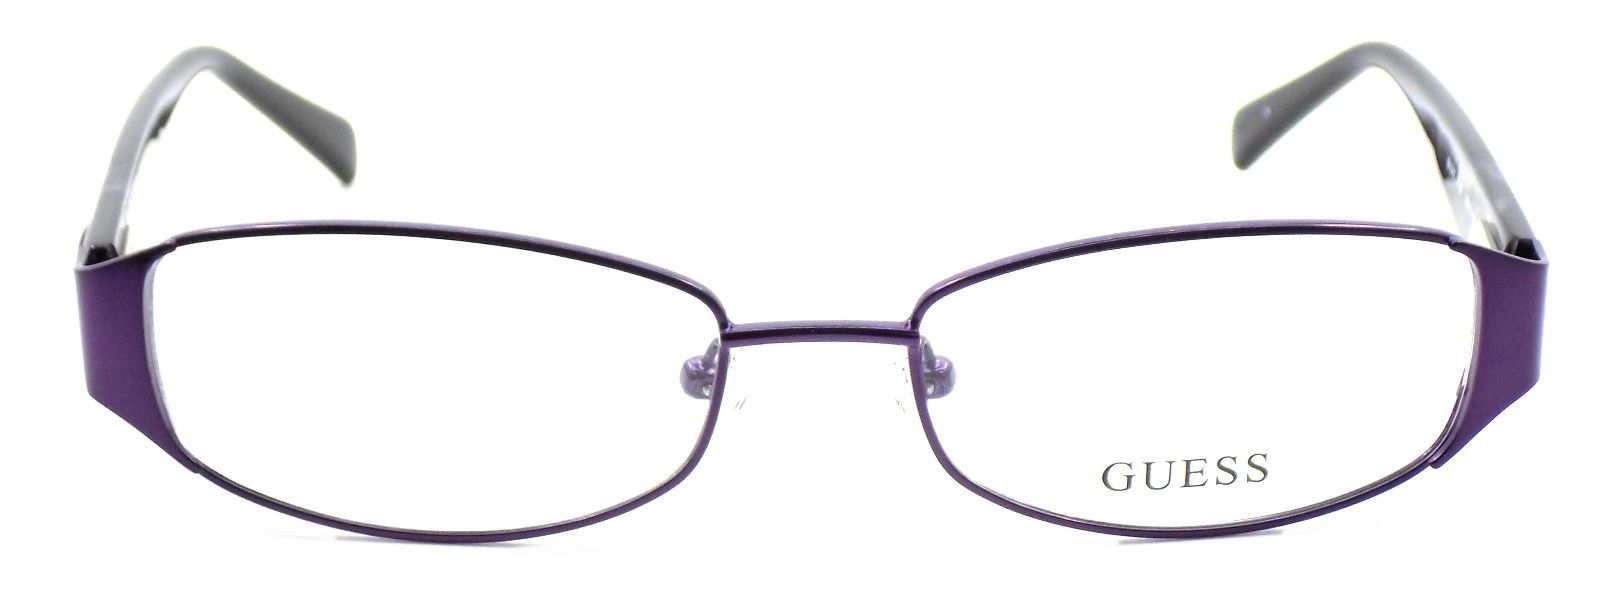 2-GUESS GU2411 PUR Women's Eyeglasses Frames 52-17-135 Purple + CASE-715583959897-IKSpecs